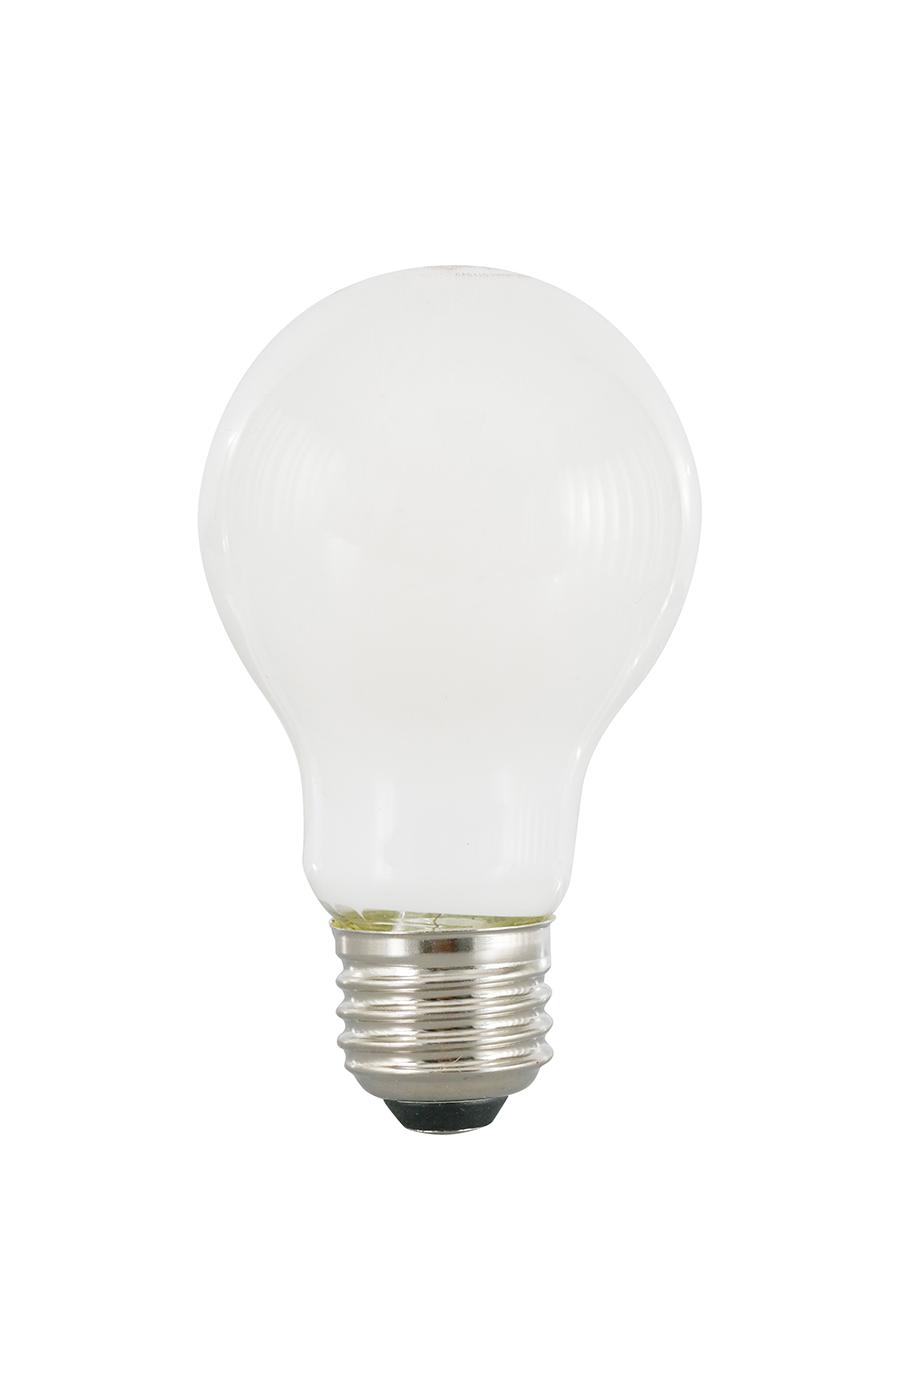 Sylvania TruWave A19 75-Watt Frosted LED Light Bulbs - Daylight; image 2 of 2